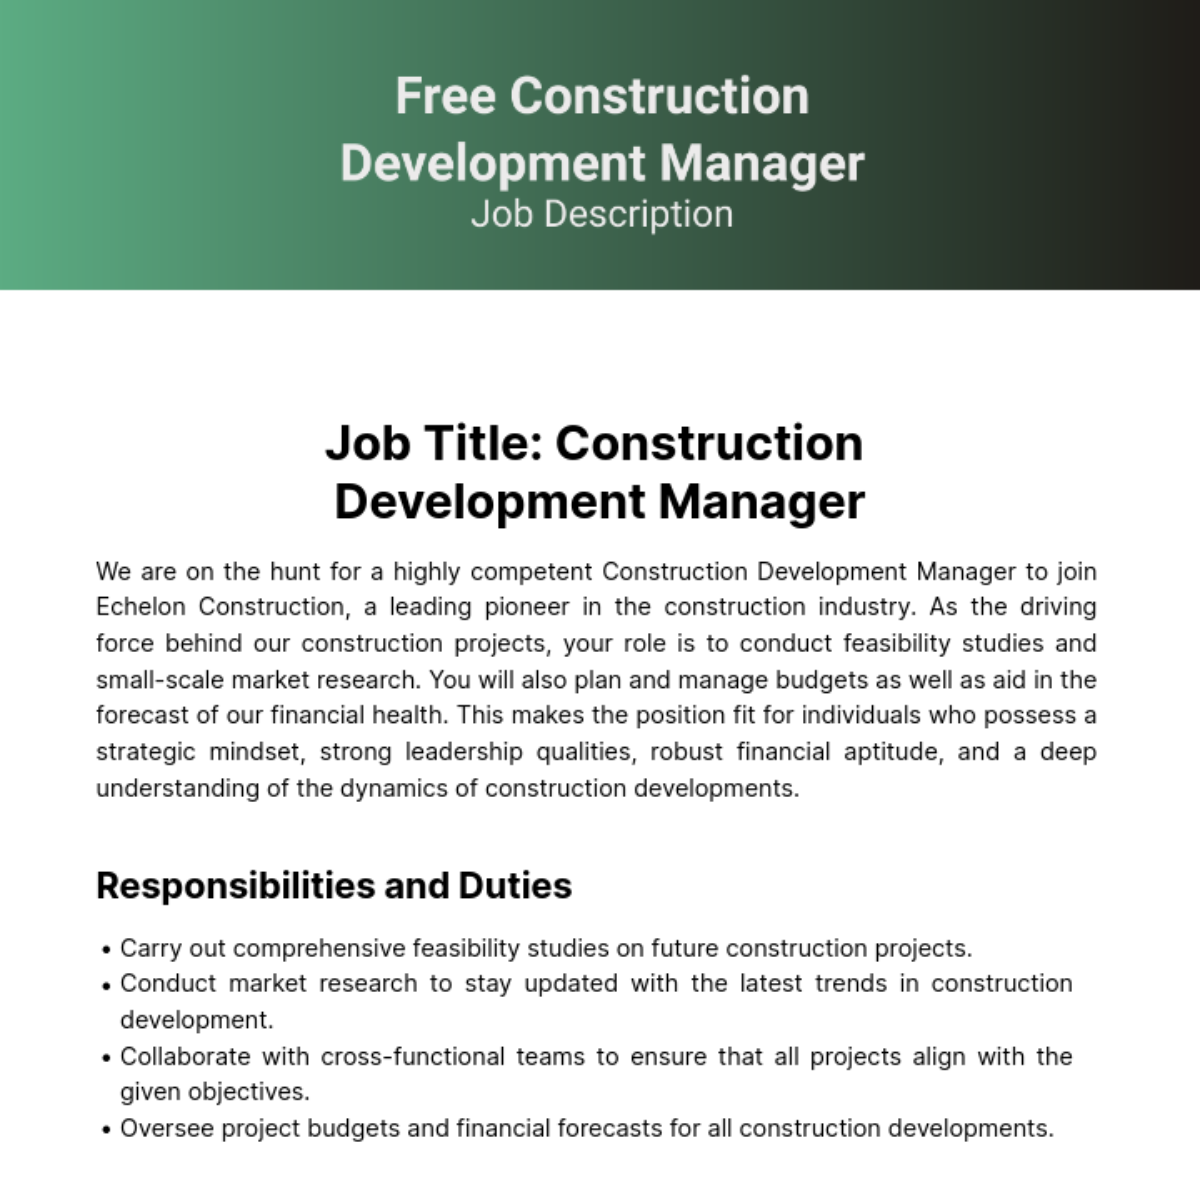 Free Construction Development Manager Job Description Template